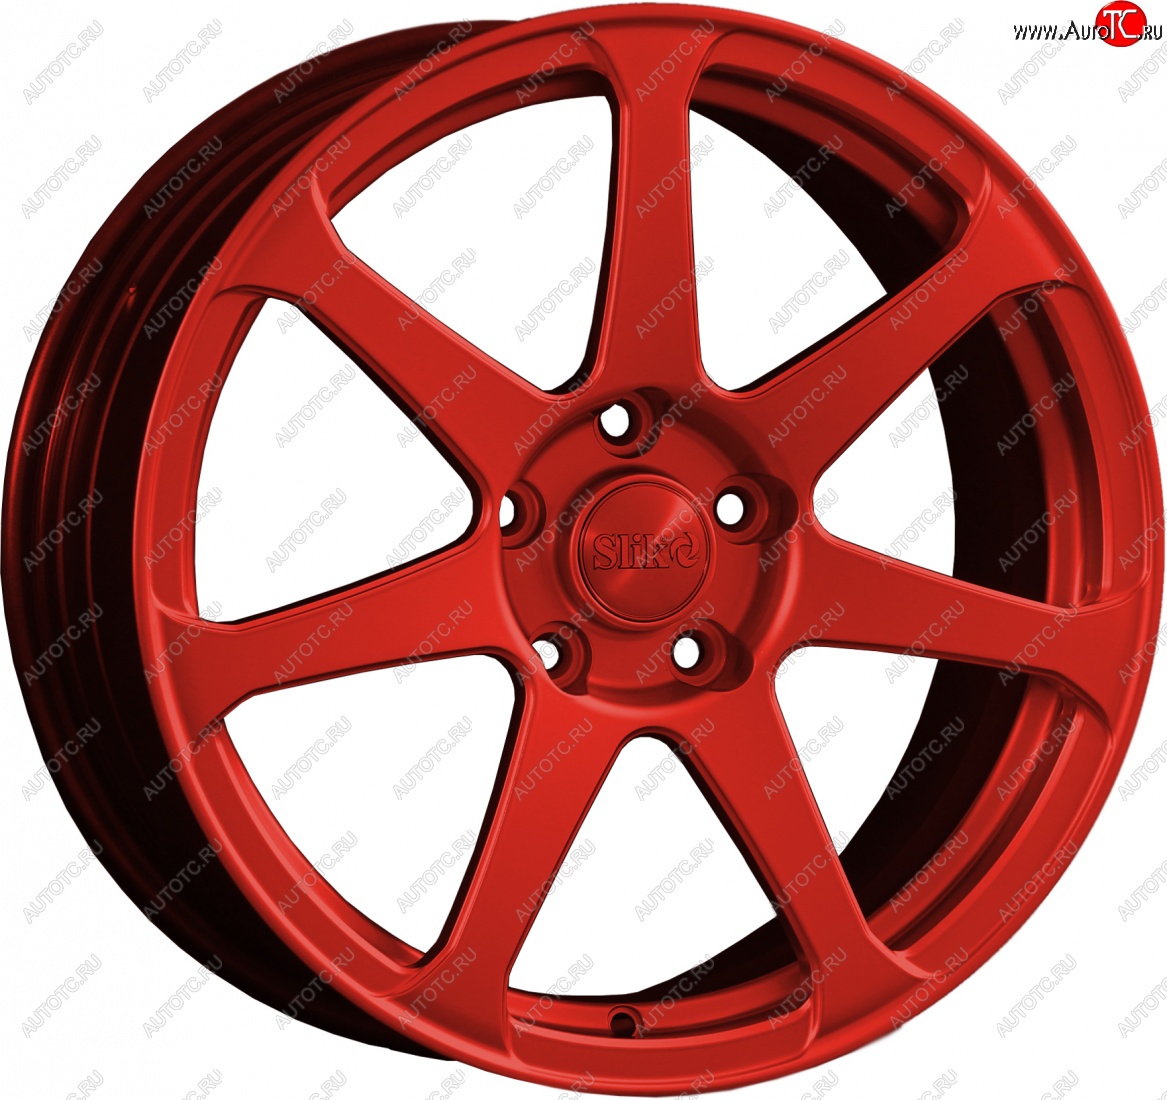 14 599 р. Кованый диск Slik classik R17x7.5 Красный (RED) 7.5x17 Chevrolet Lacetti хэтчбек (2002-2013) 4x114.3xDIA56.6xET44.0 (Цвет: RED)